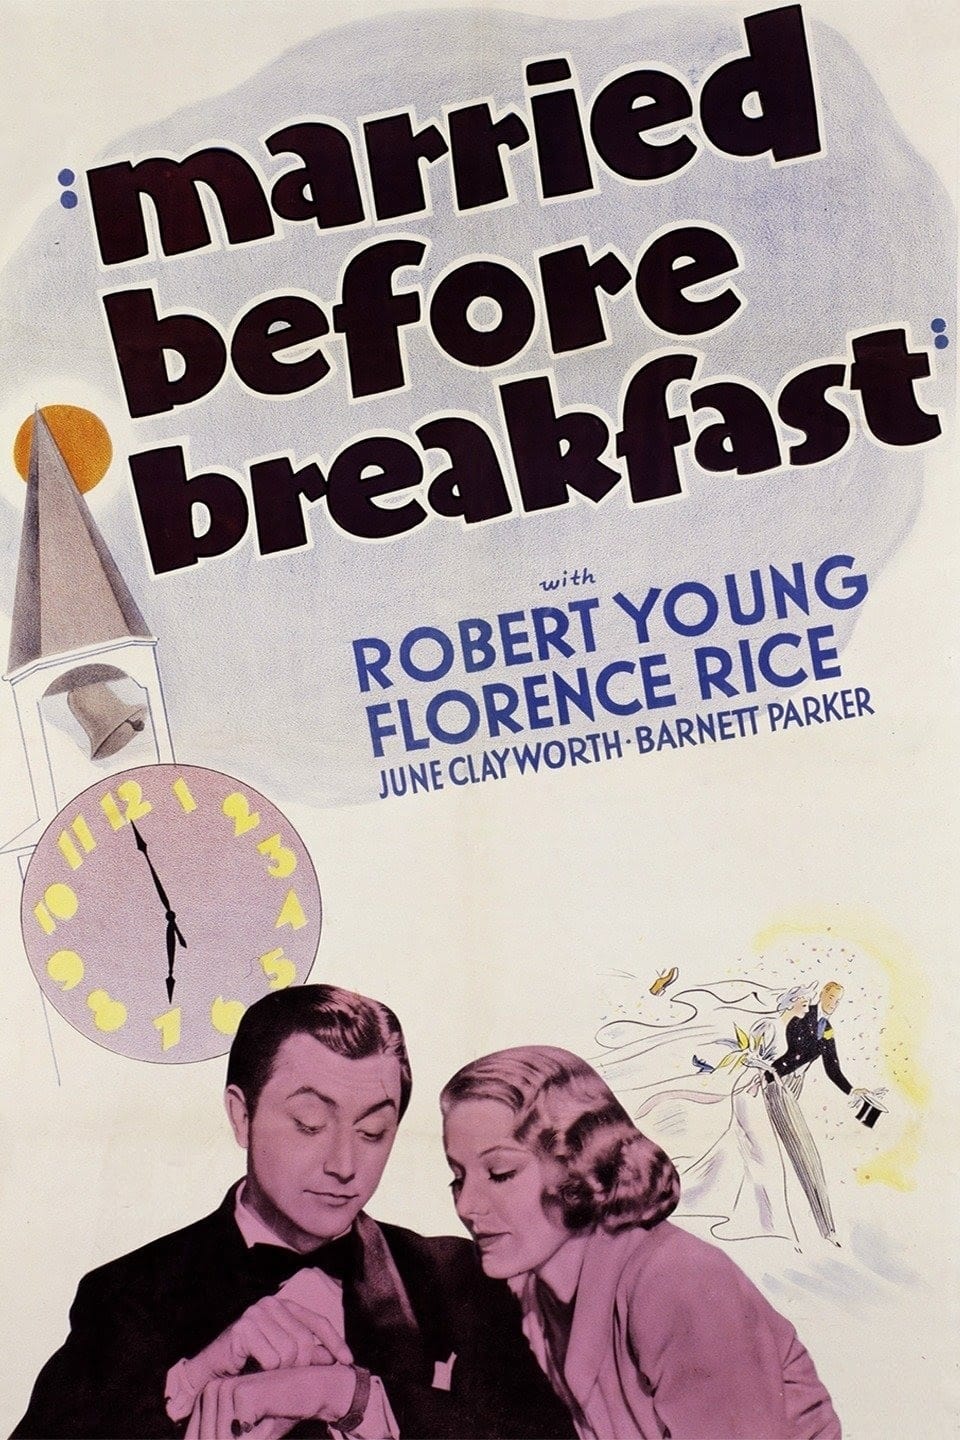 Married Before Breakfast (1937)